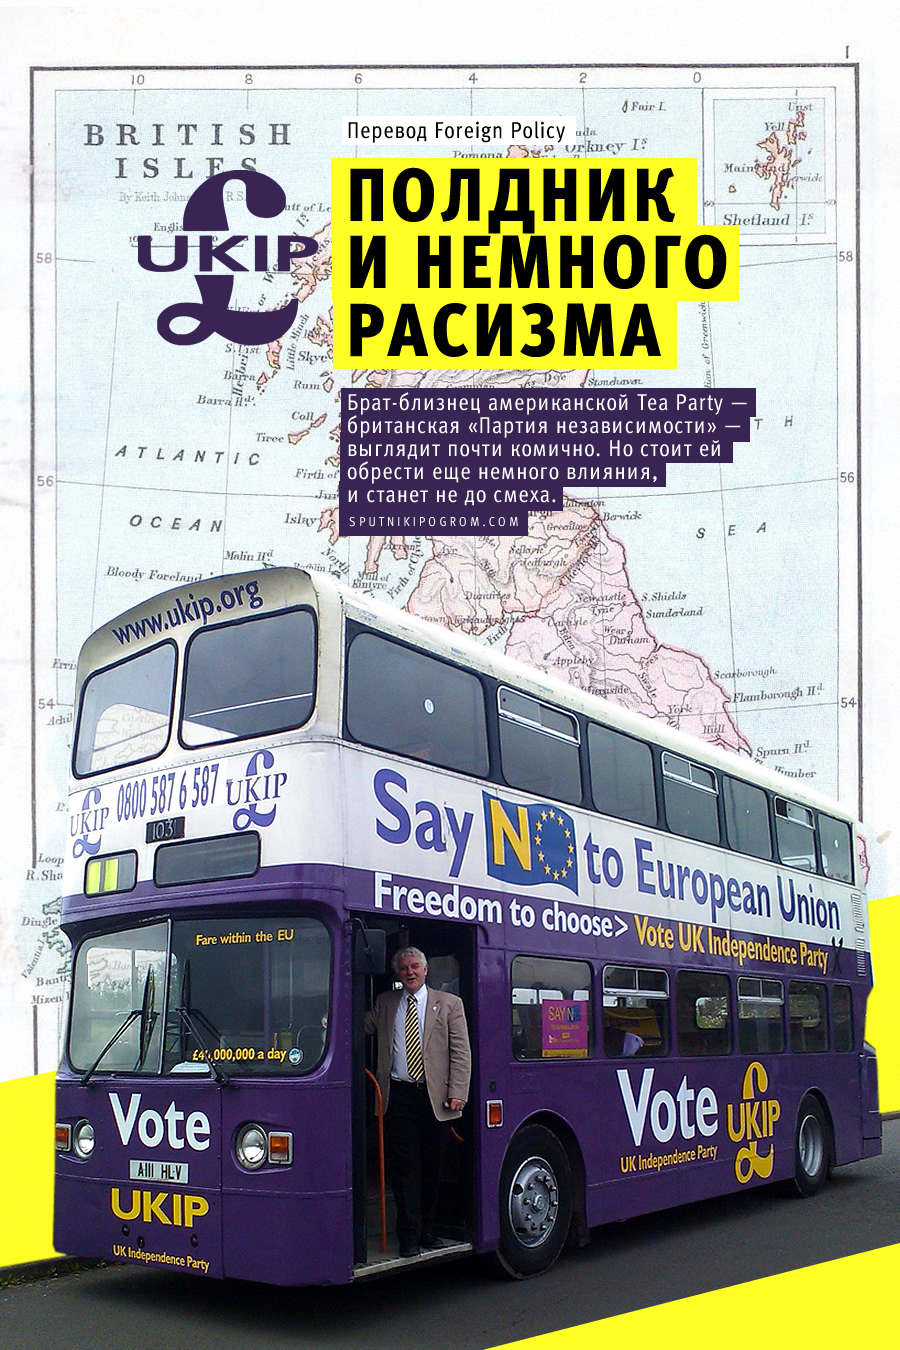 http://sputnikipogrom.com/wp-content/uploads/2014/05/UKIP.jpg